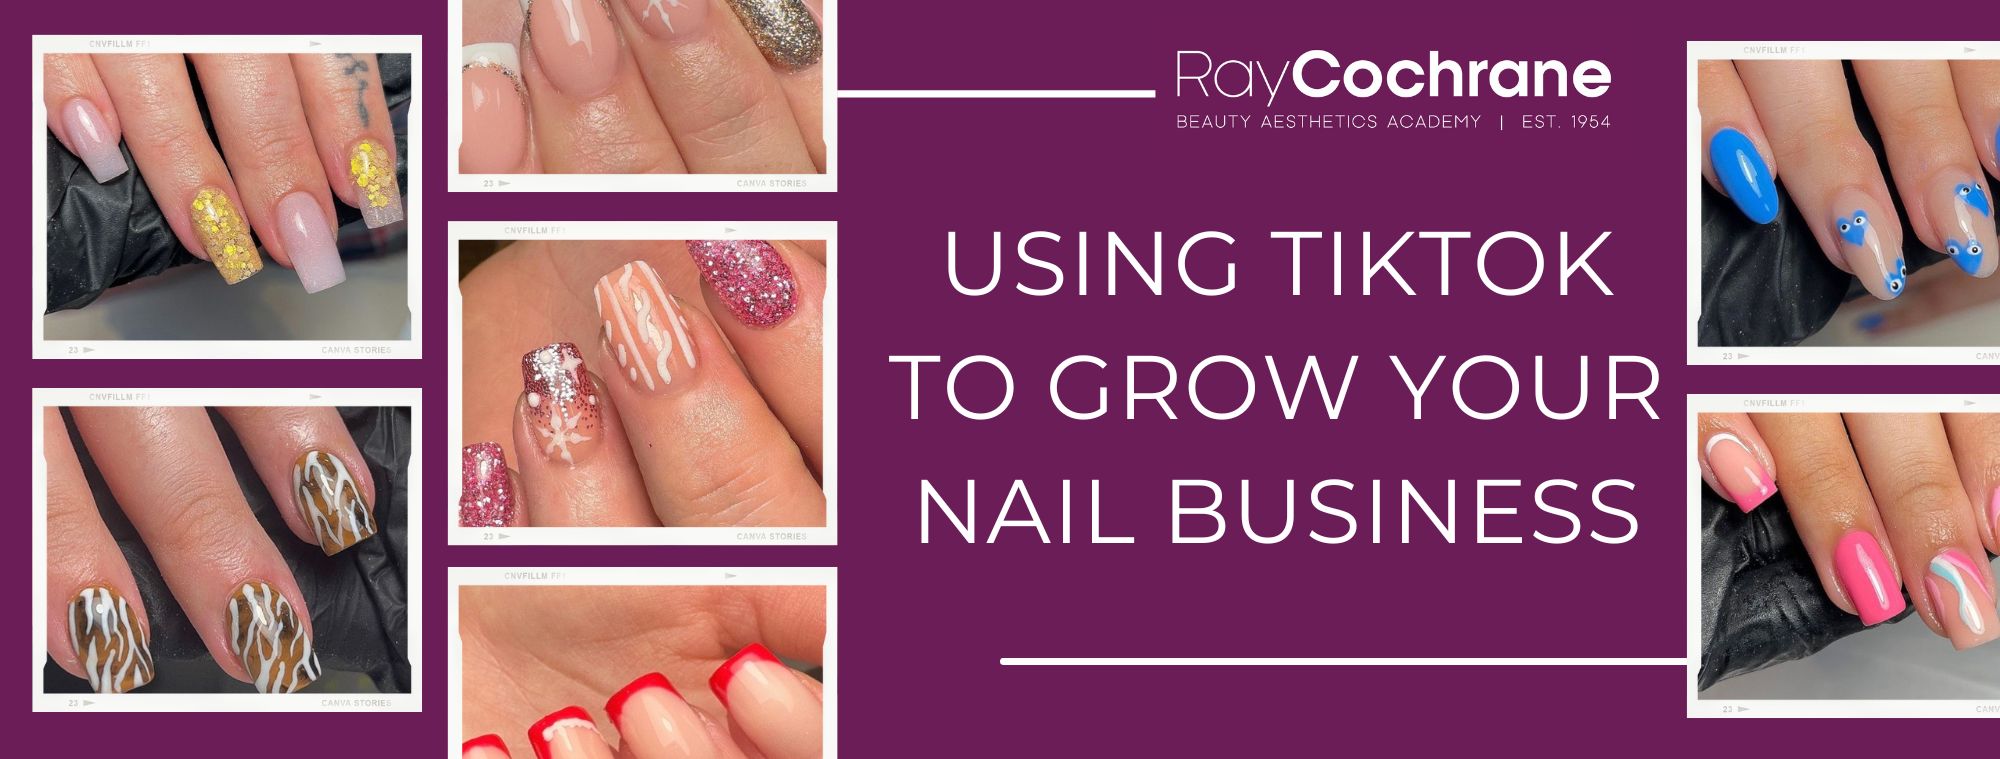 How to grow your nail business using Tik Tok!